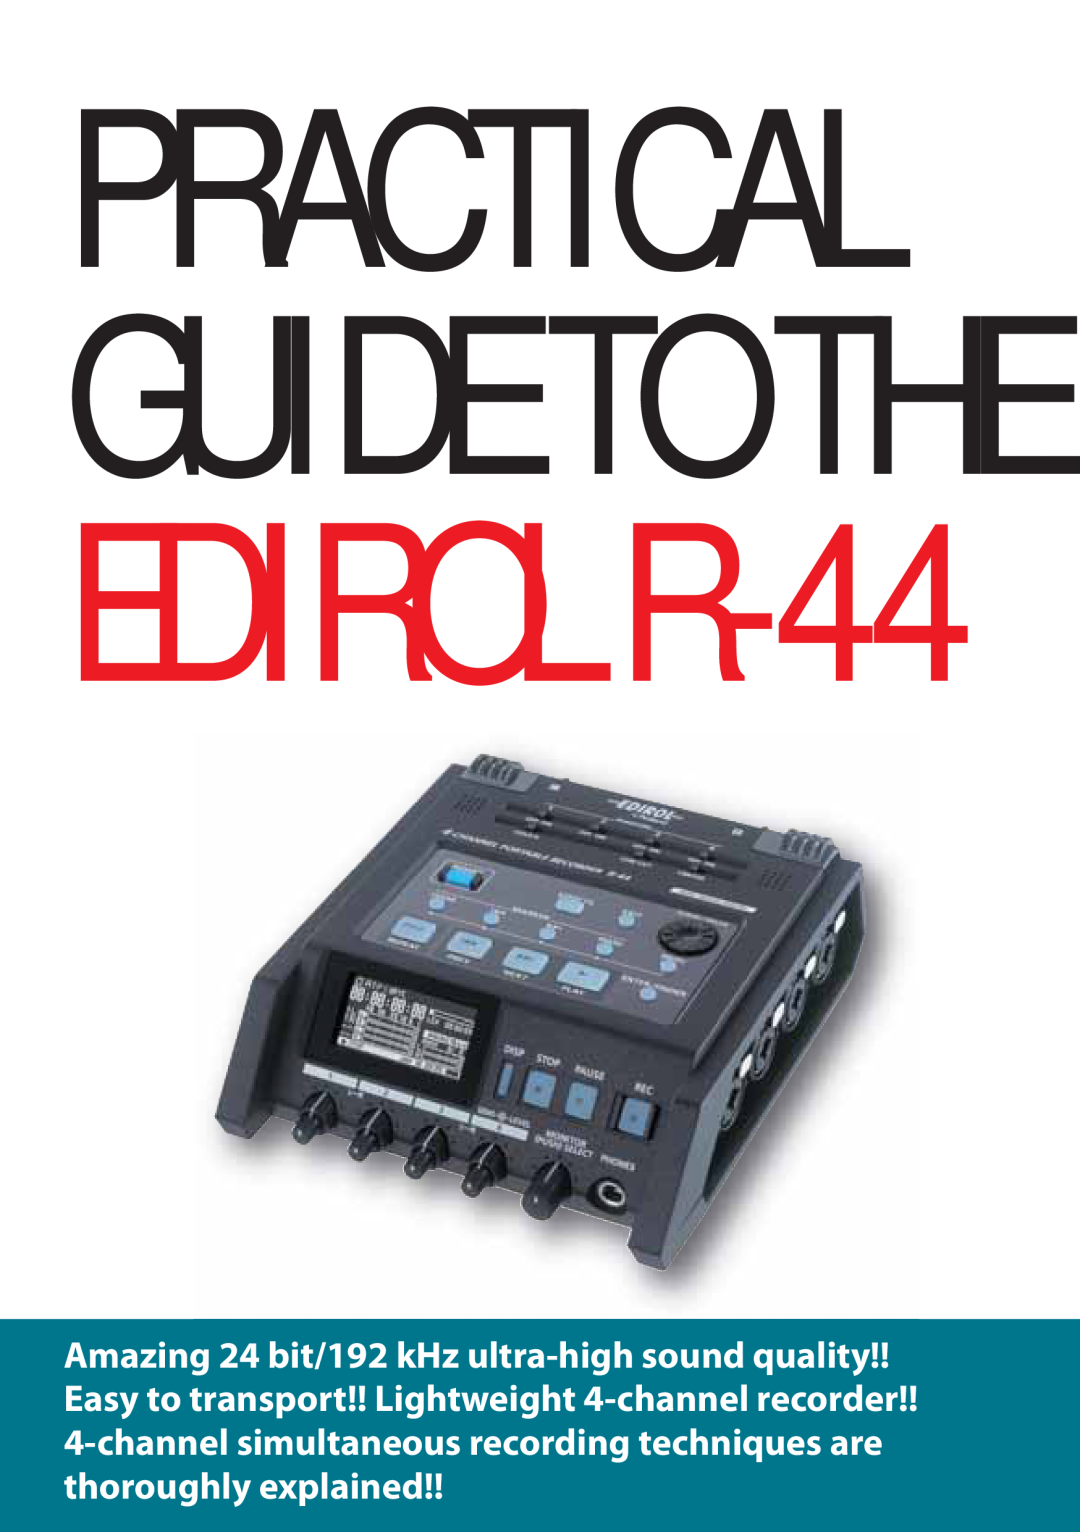 Edirol manual PRACTICAL GUIDE TO THE EDIROL R-44 